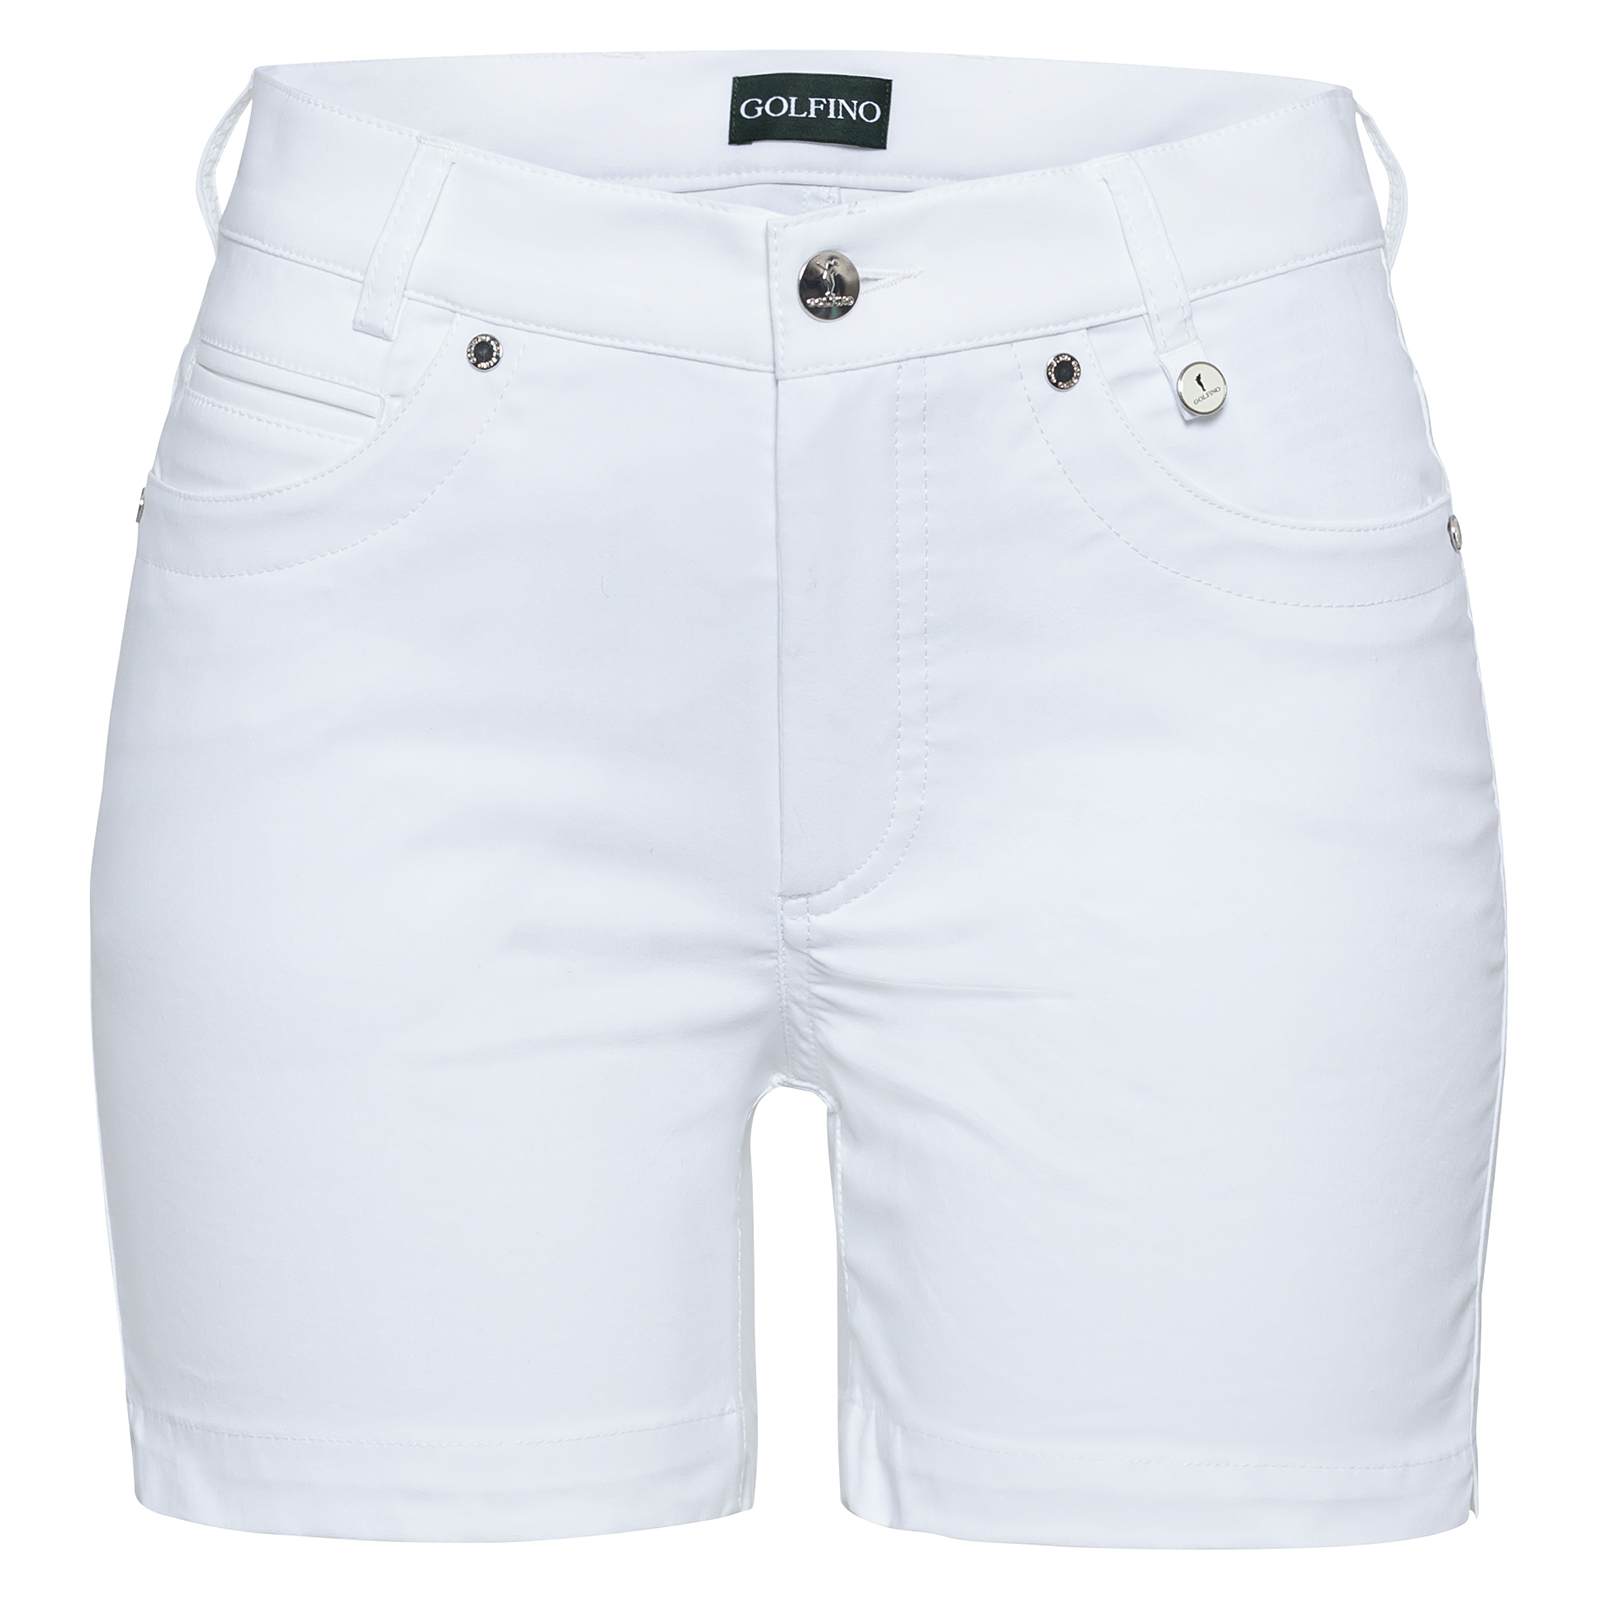 Ladies' 5-pocket style golf shorts